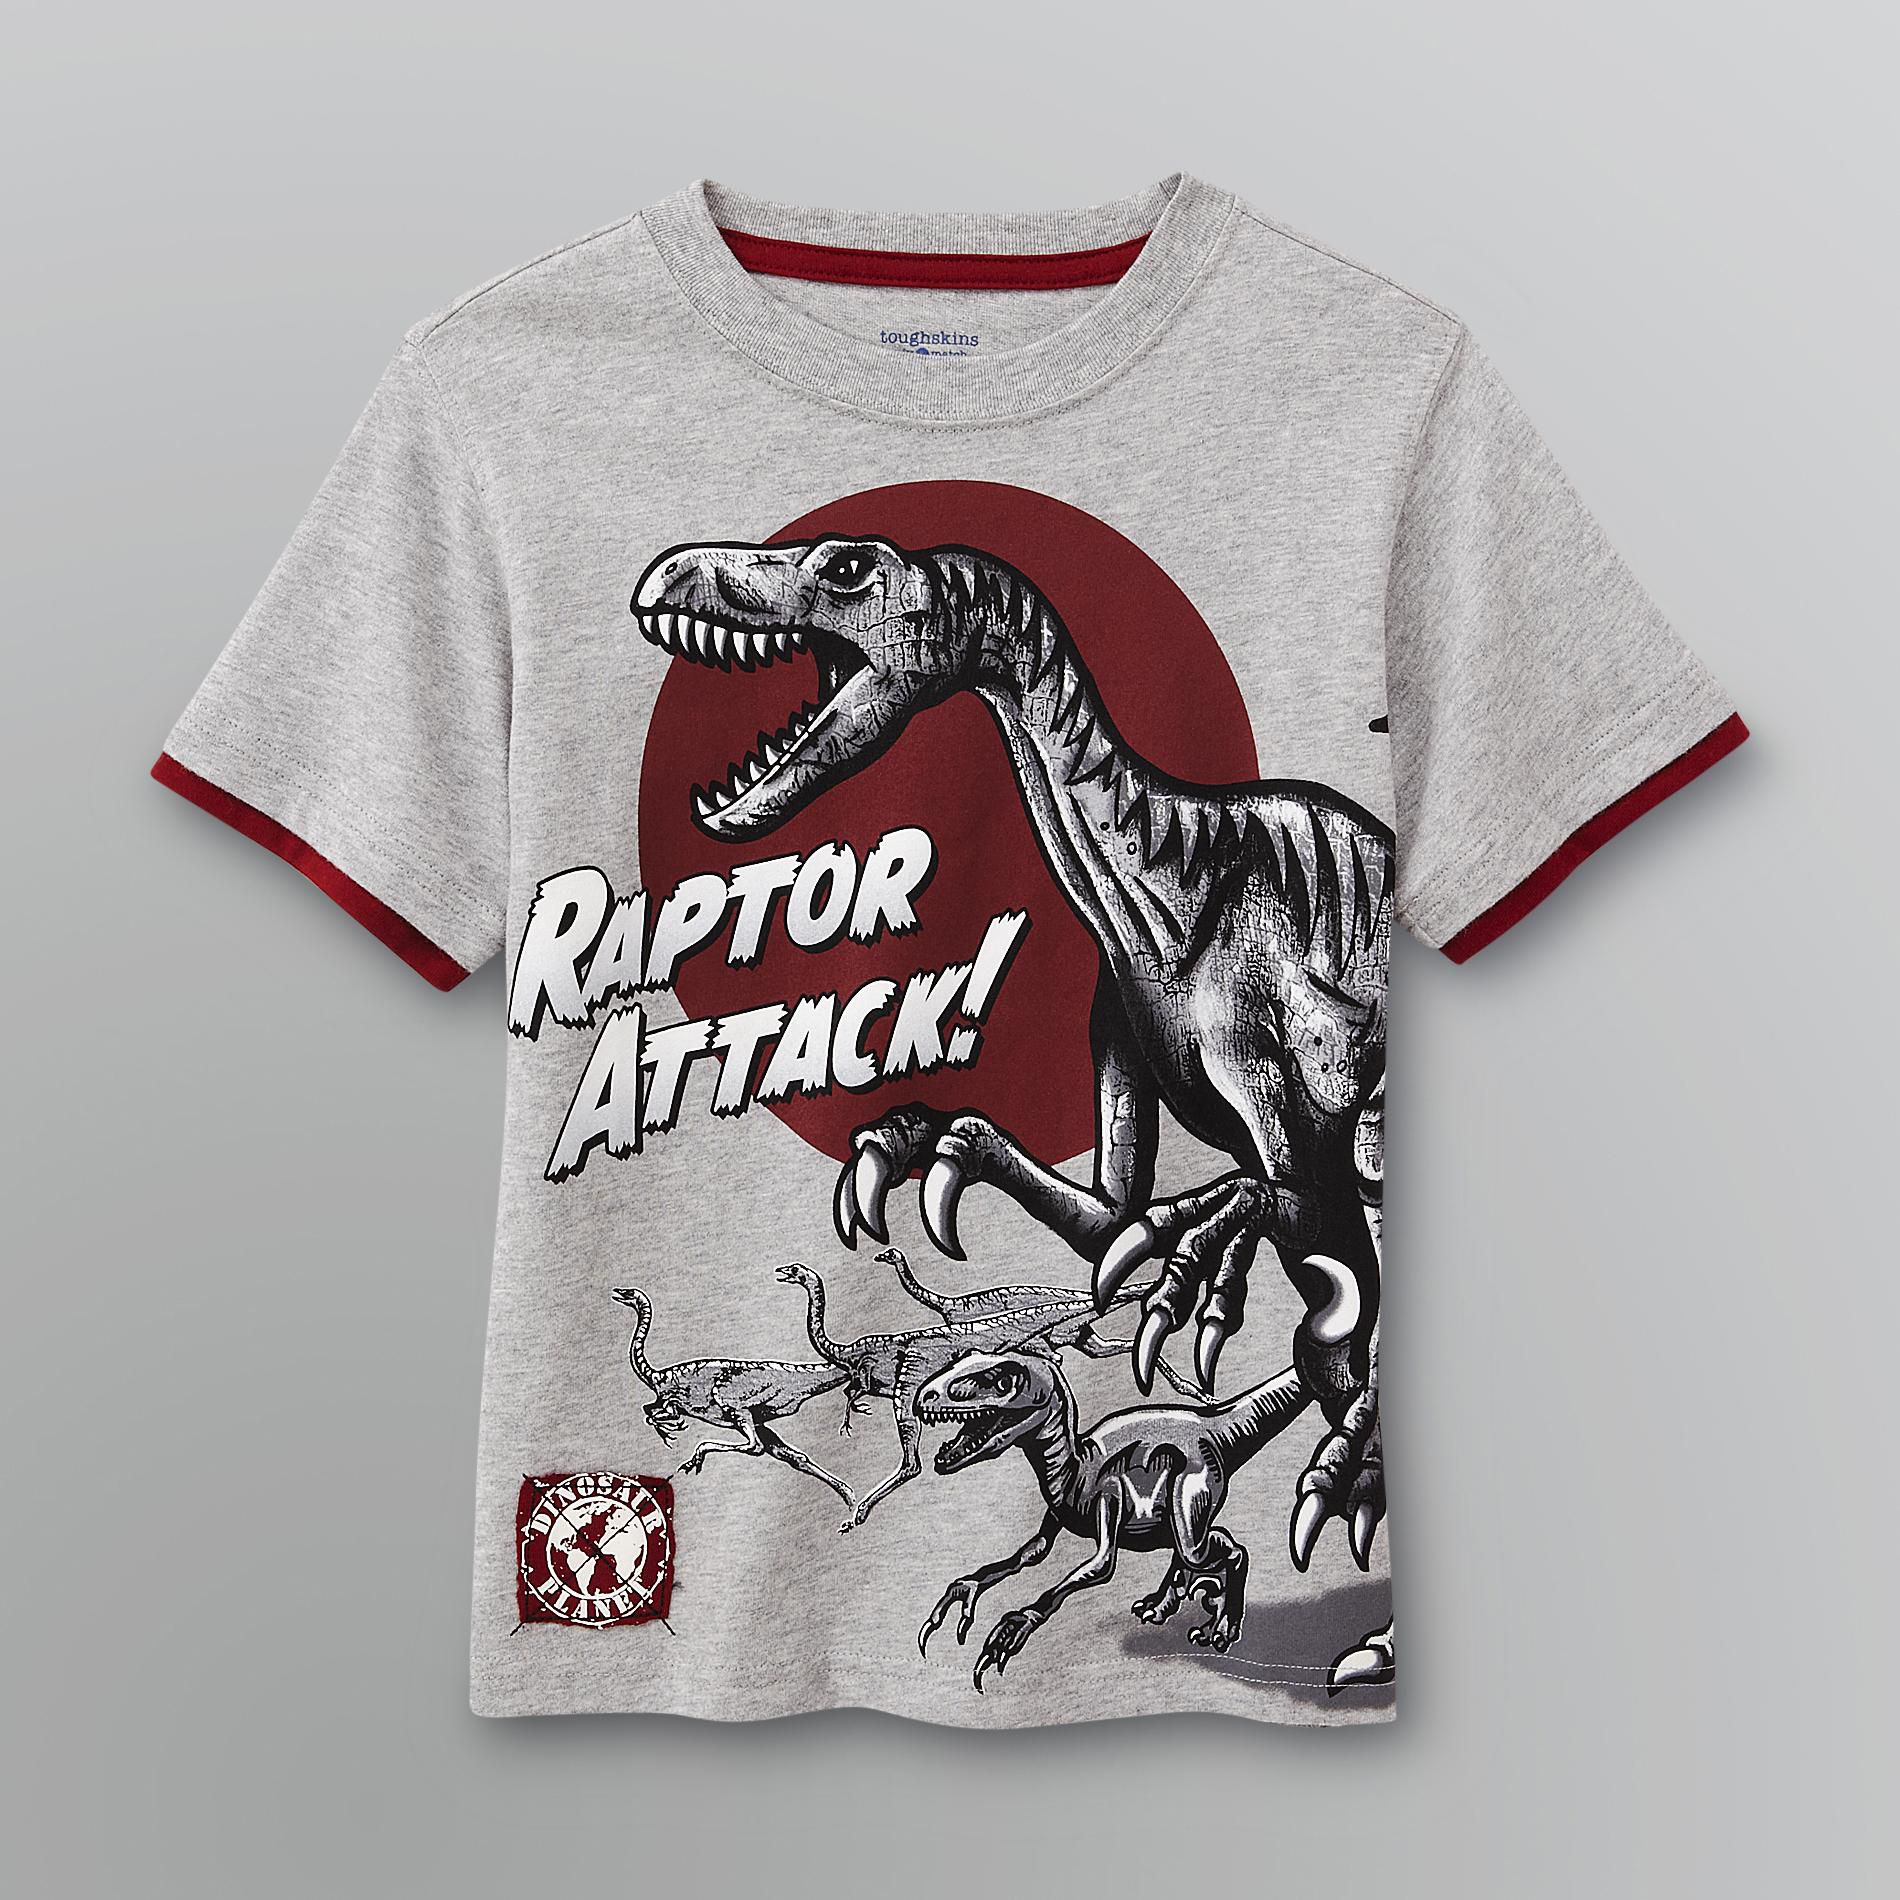 Toughskins Boy's Layered Look Graphic Dinosaur Planet T-Shirt